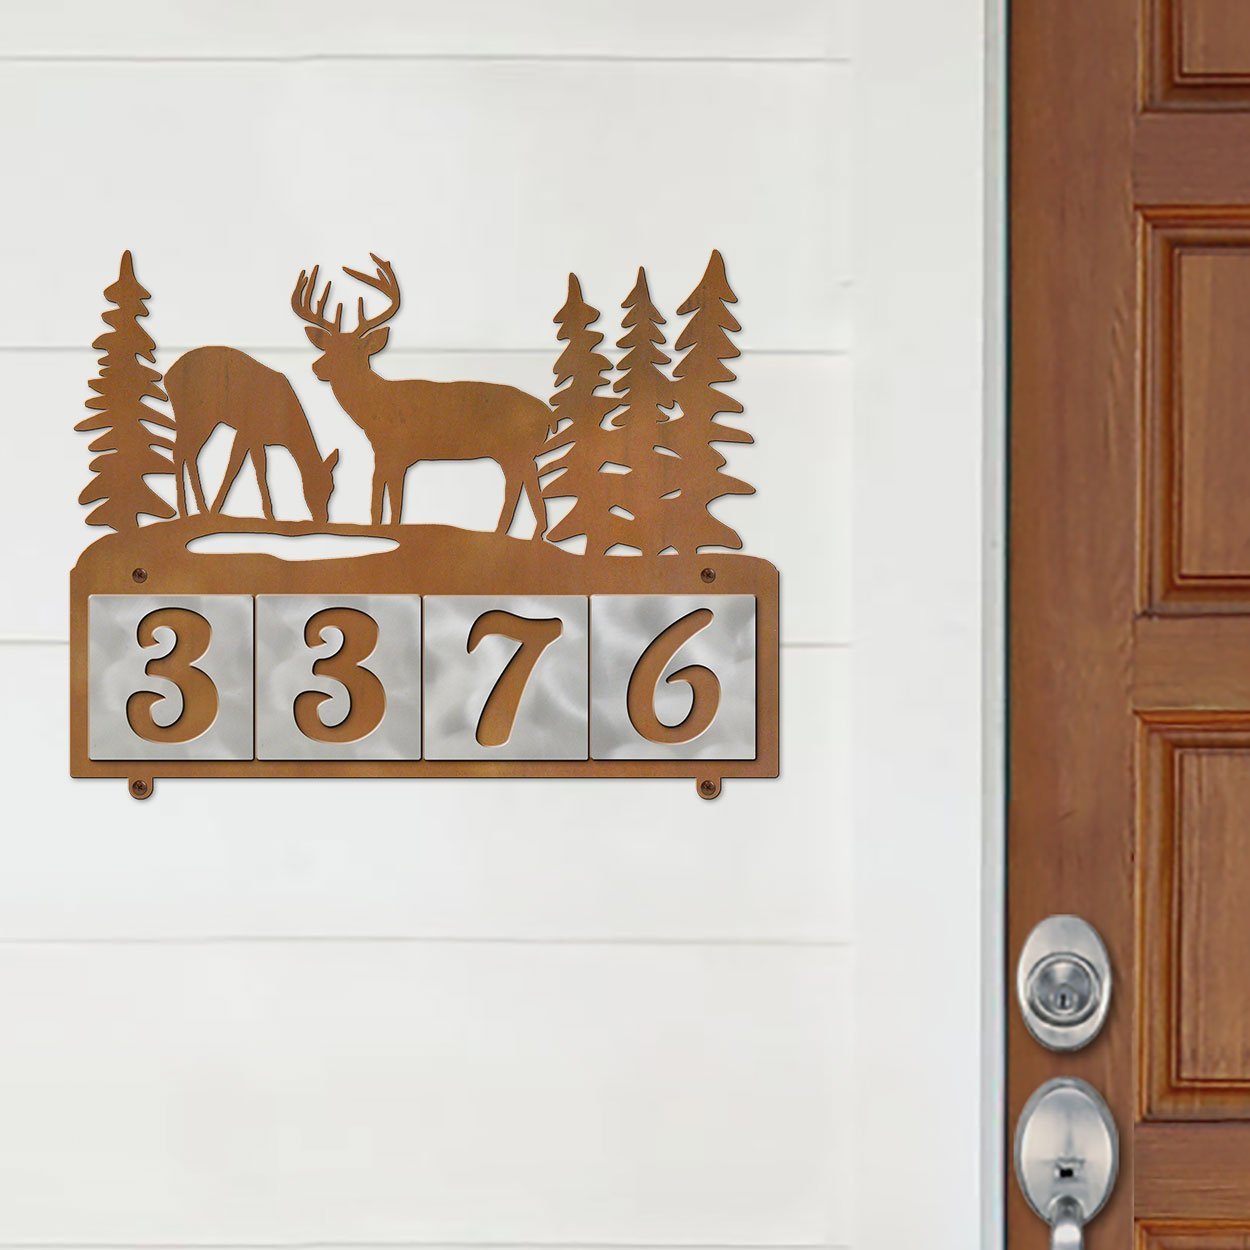 607064 - Deer Buck and Doe Design 4-Digit Horizontal 4-inch Tile Outdoor House Numbers